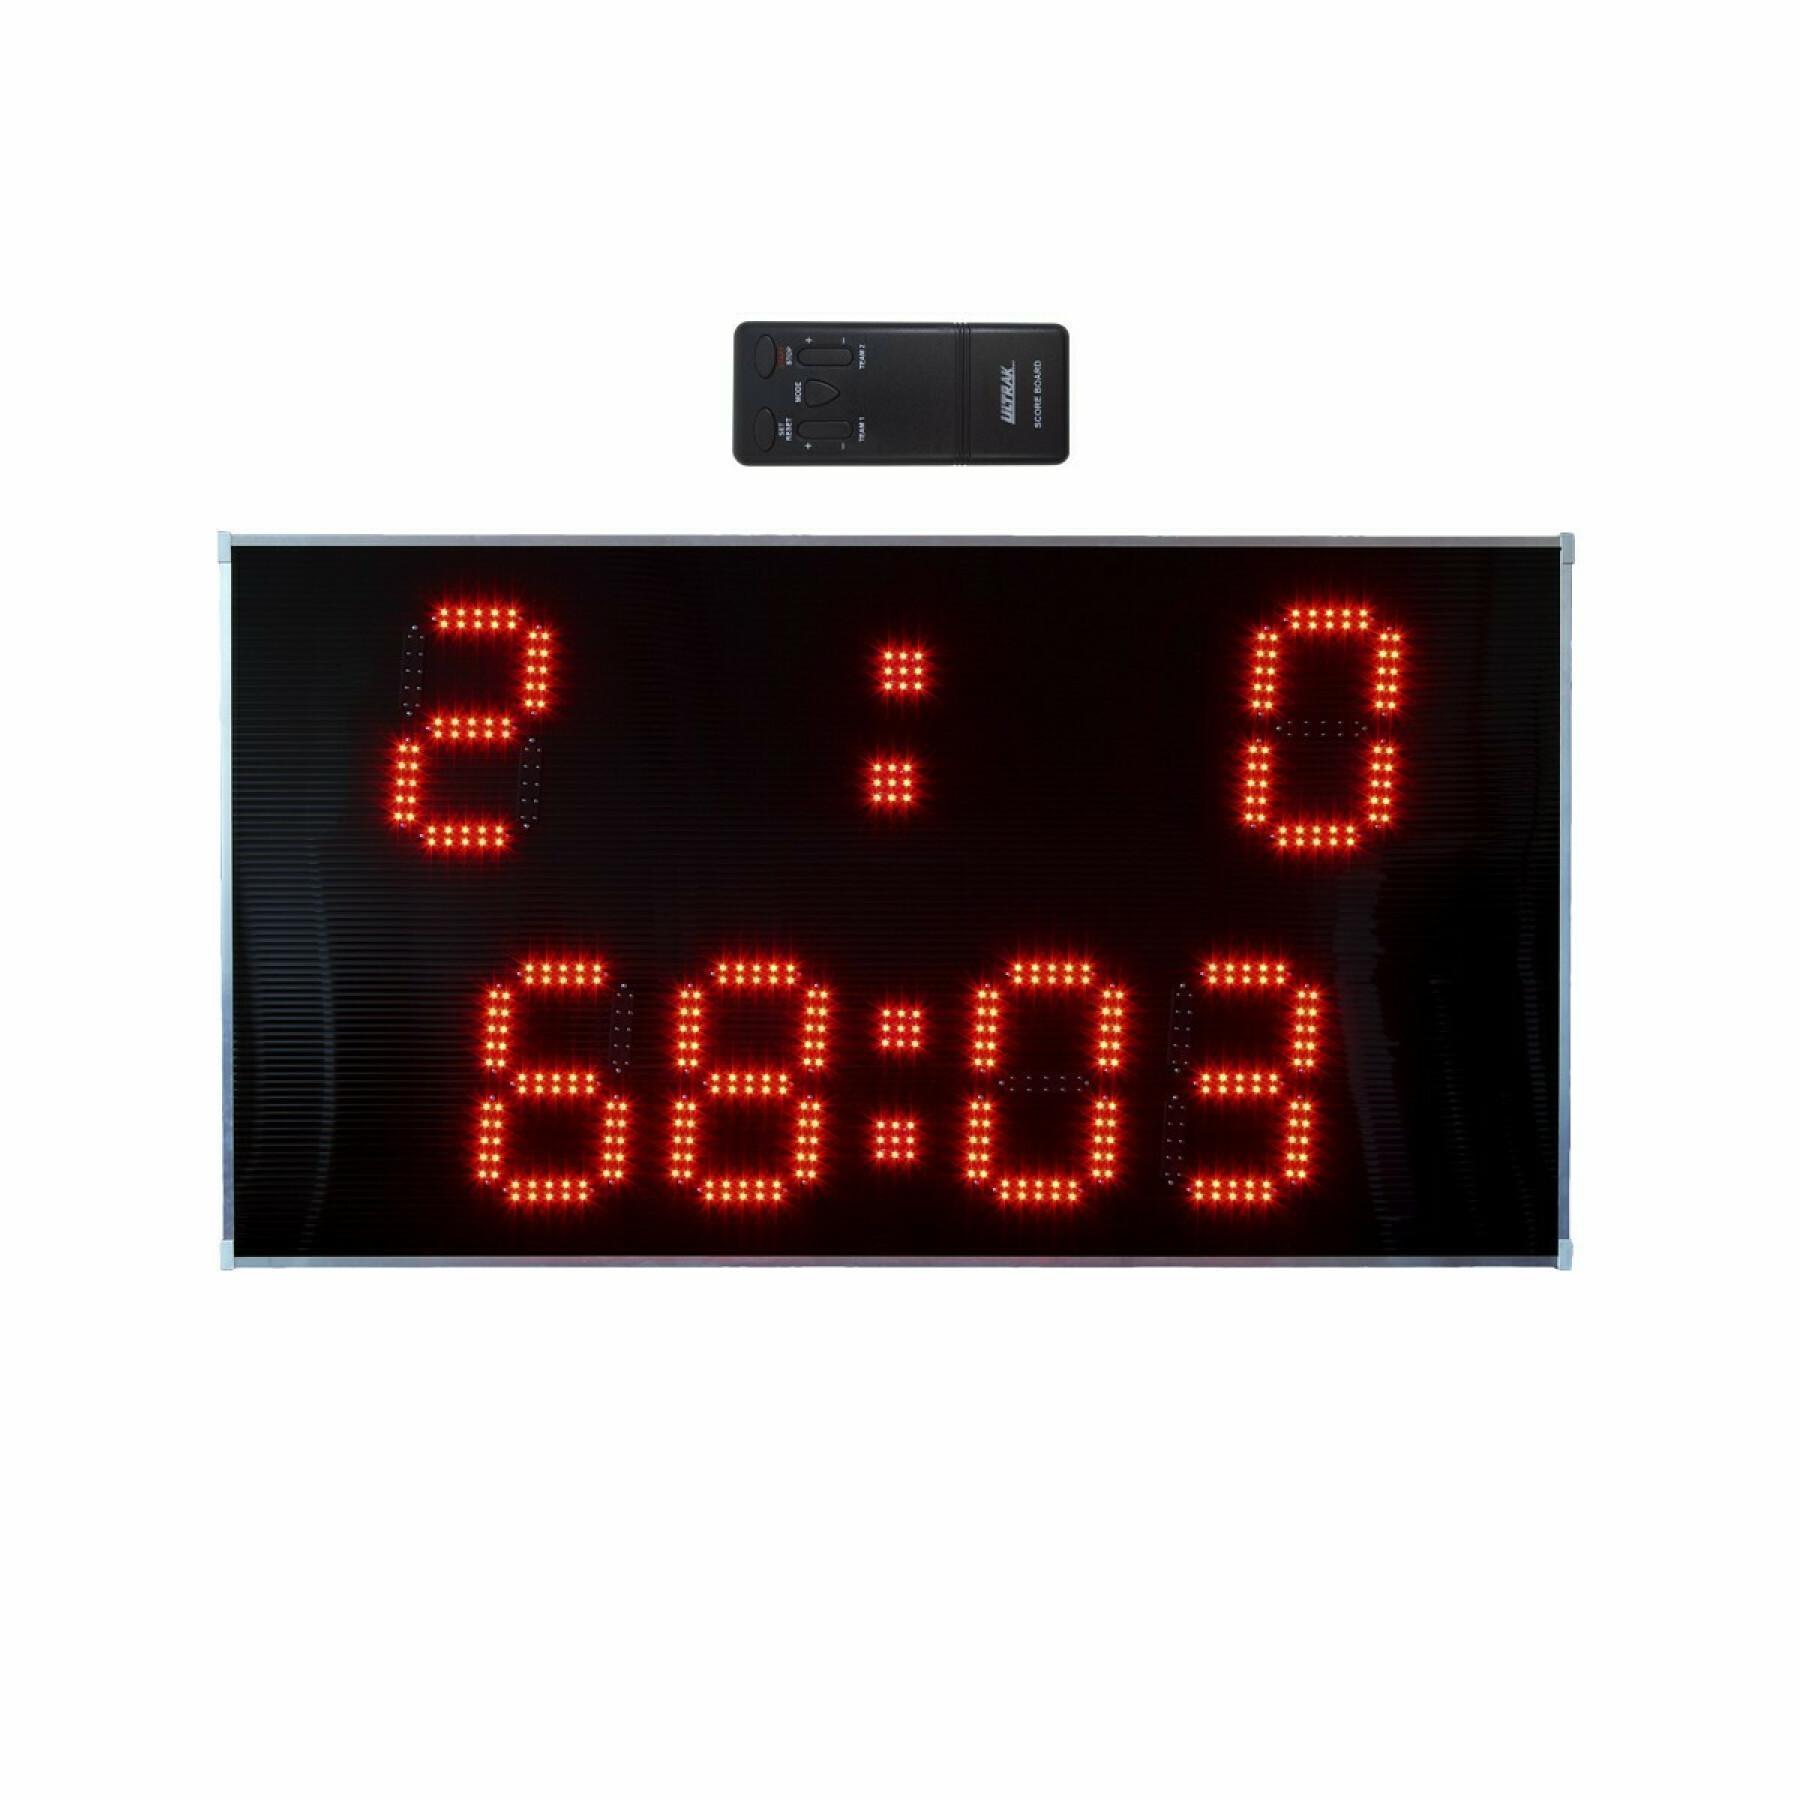 Panel de visualización de 9 segundos con mando a distancia Sporti Francia Derby